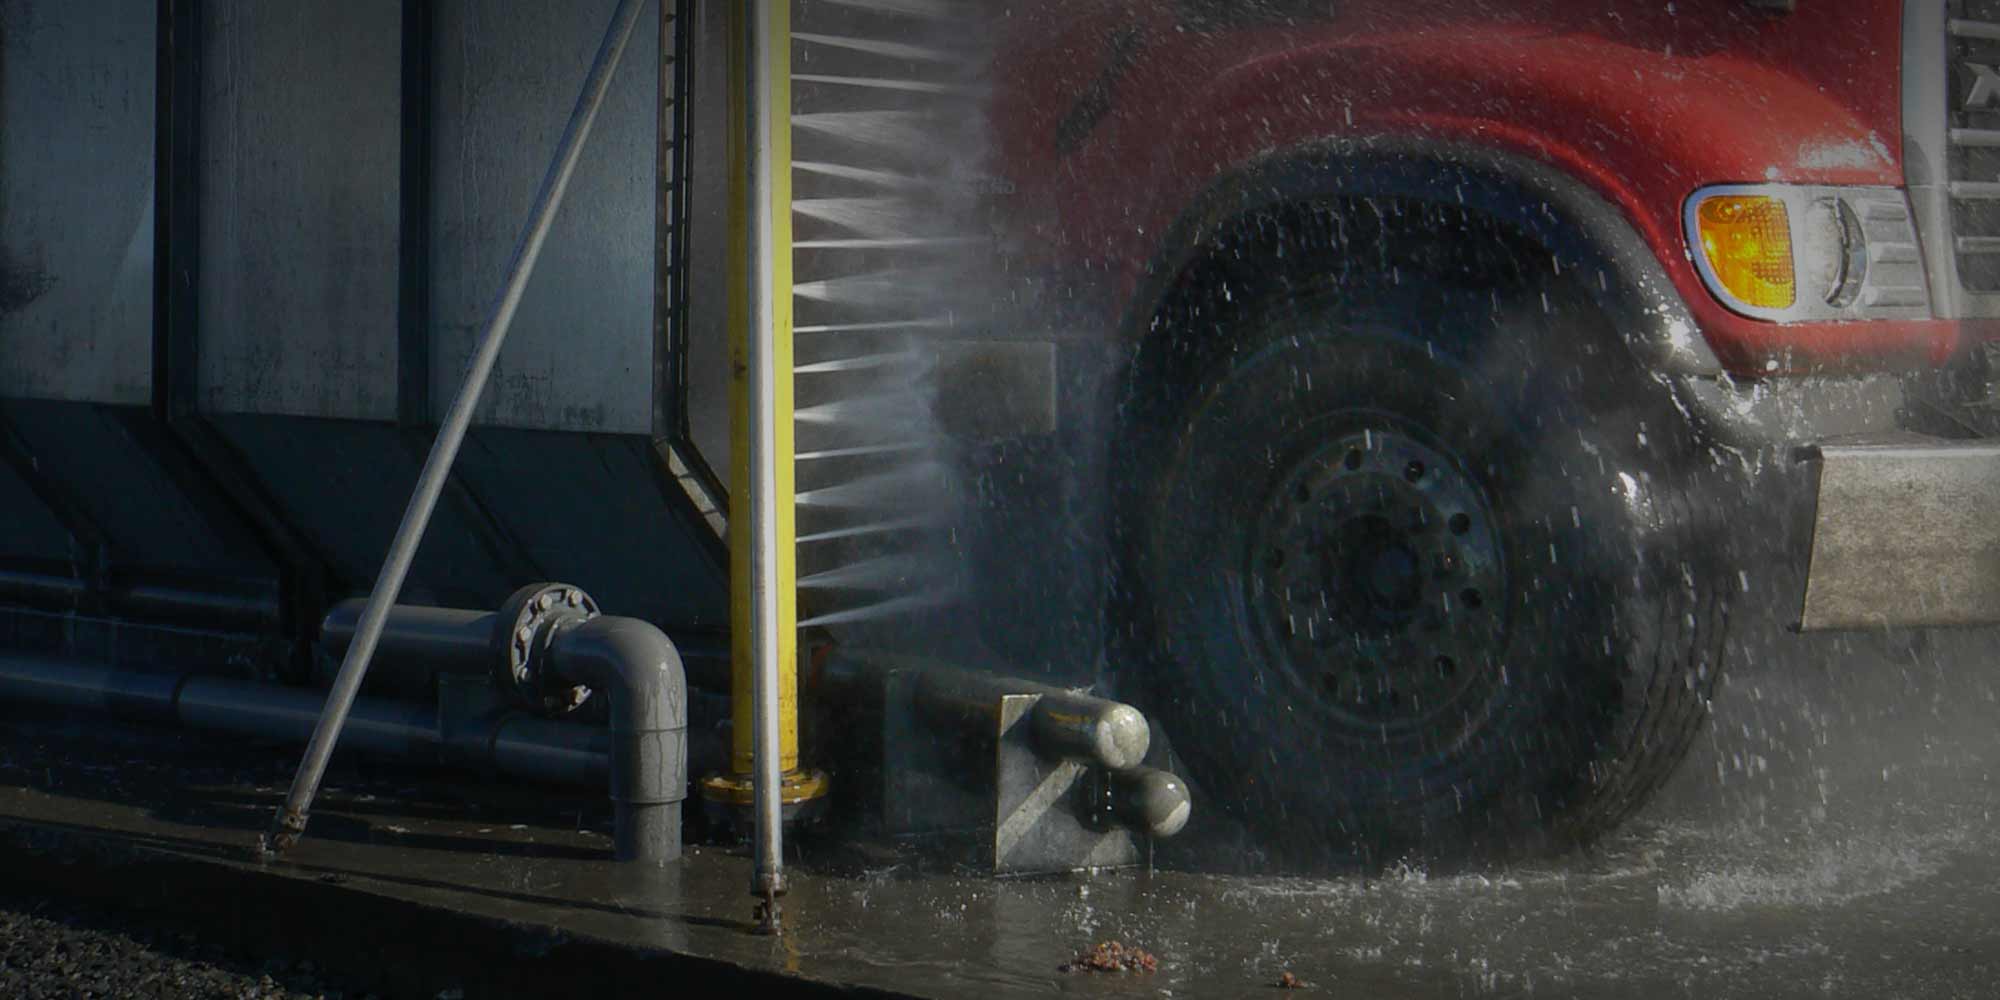 A tire wash system splashing a semi truck tire.